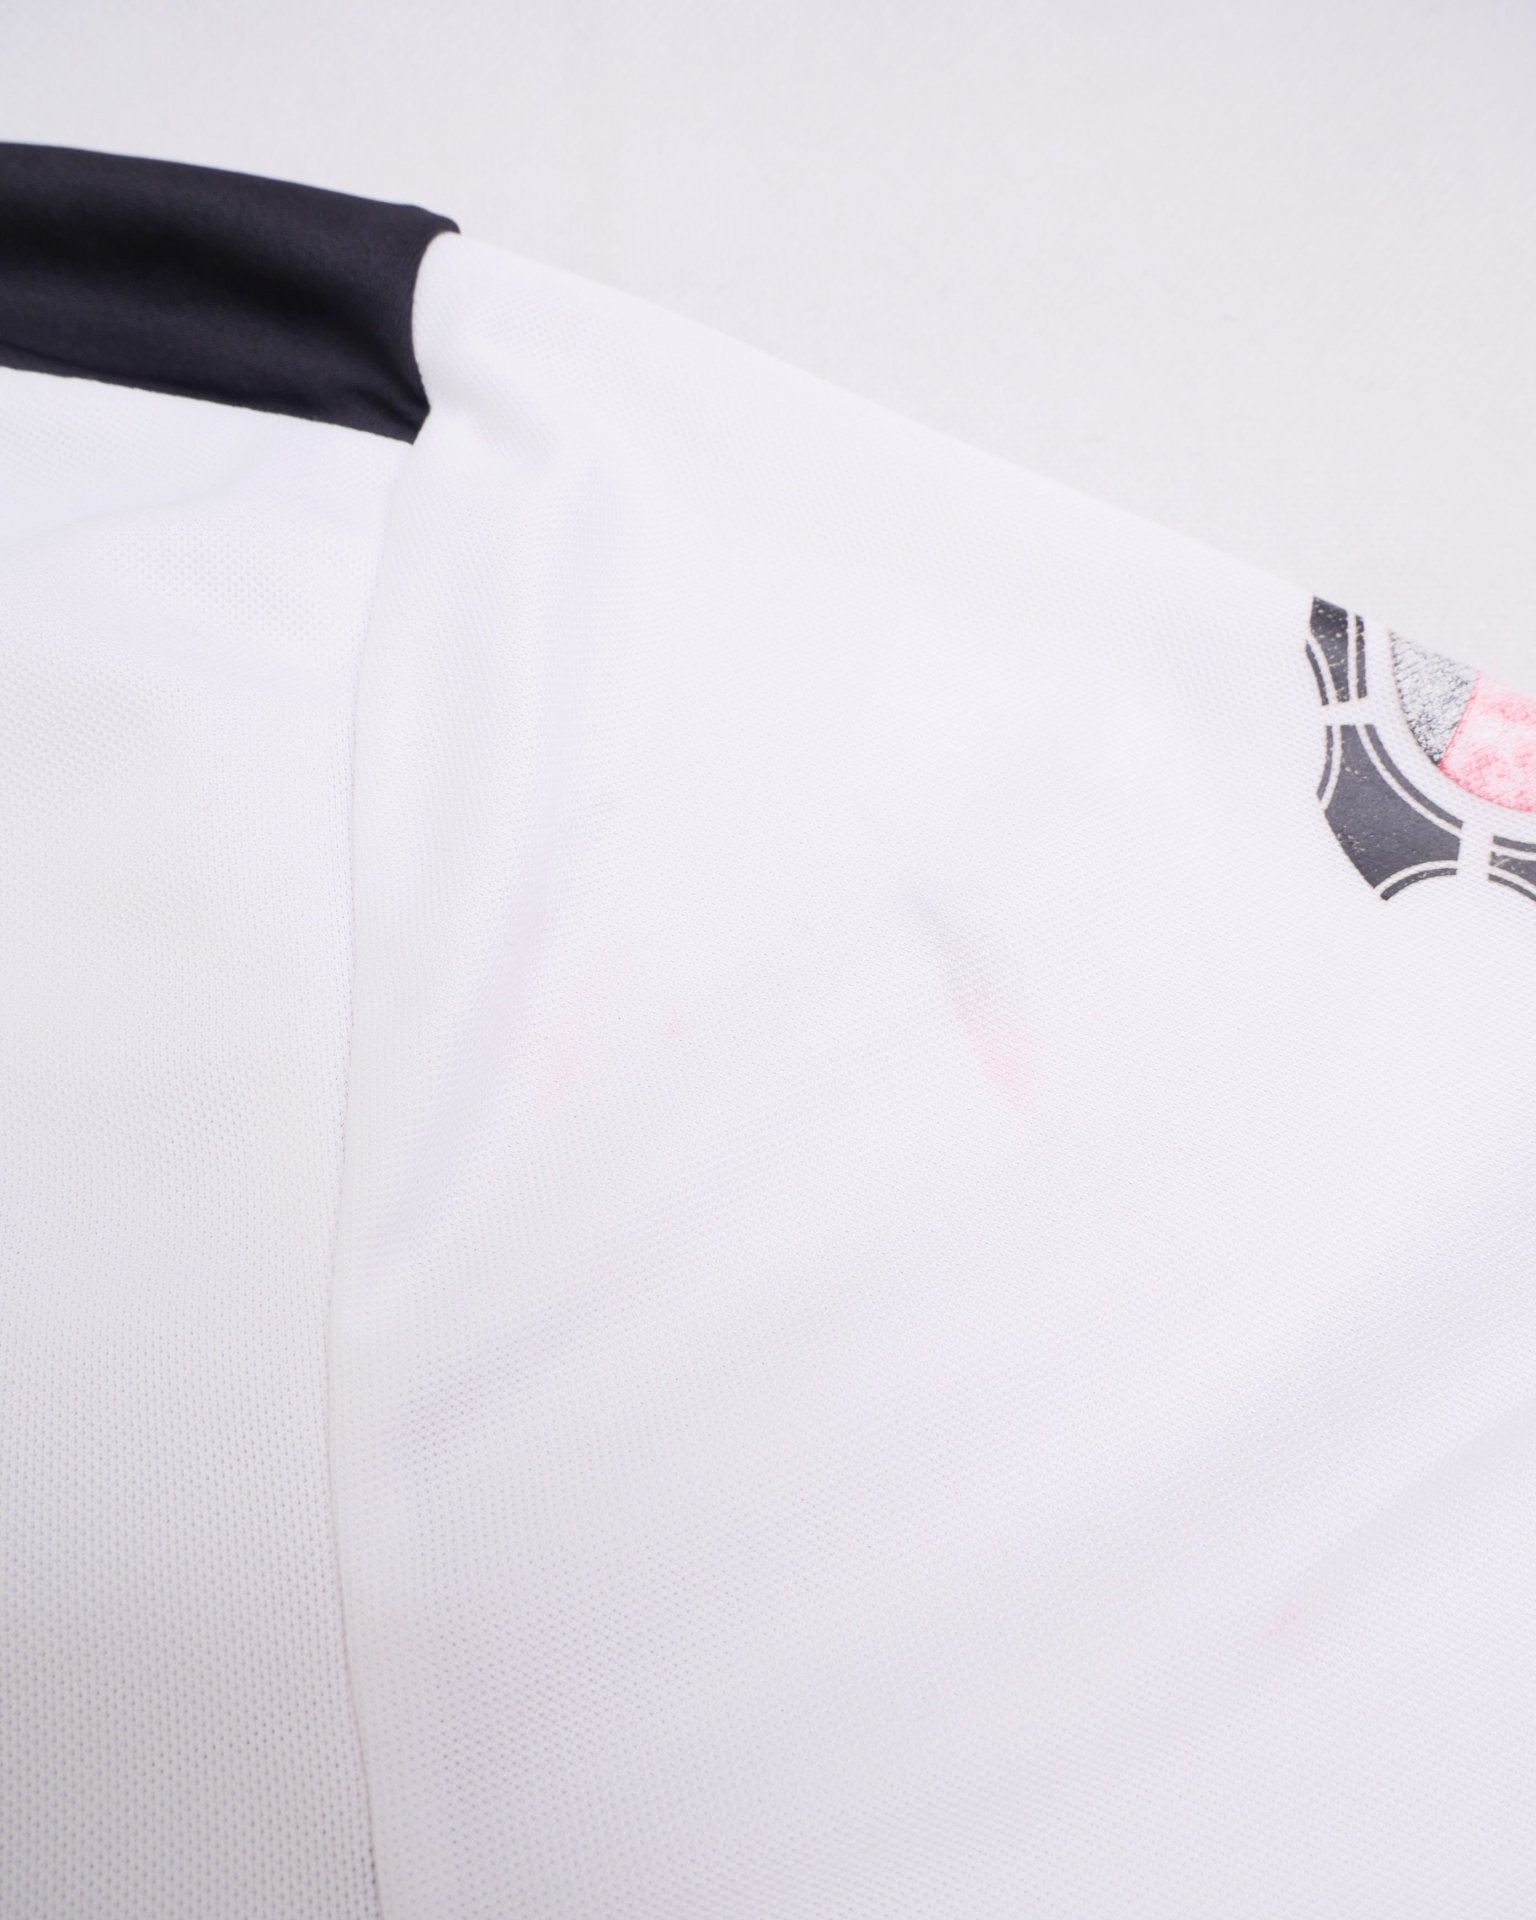 adidas Deutscher Fussball-Bund embroidered Logo Soccer Jersey Shirt - Peeces